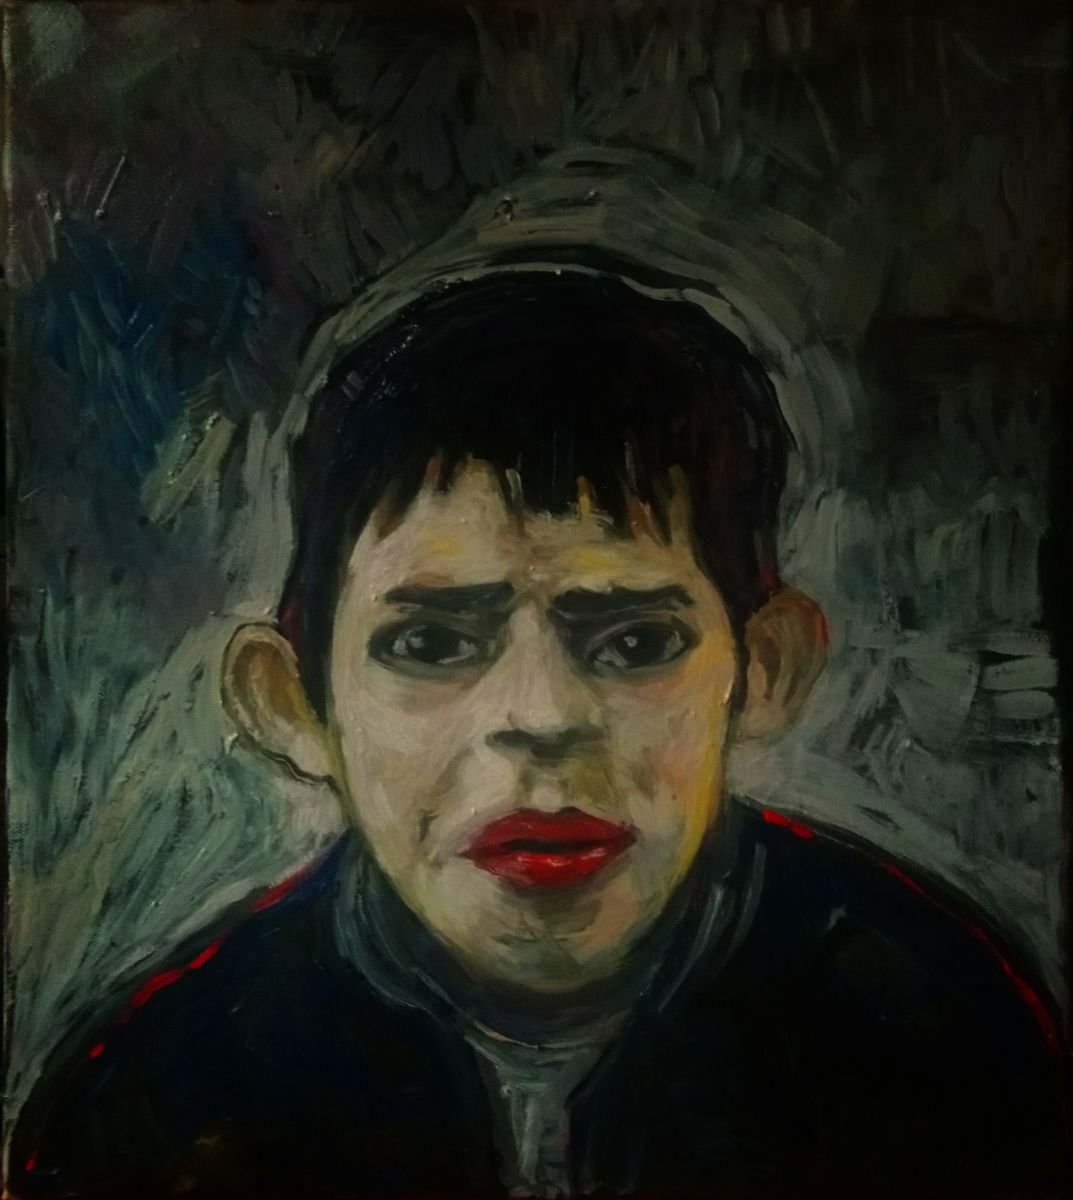 Angry boy portrait by Cosmin Tudor Sirbulescu